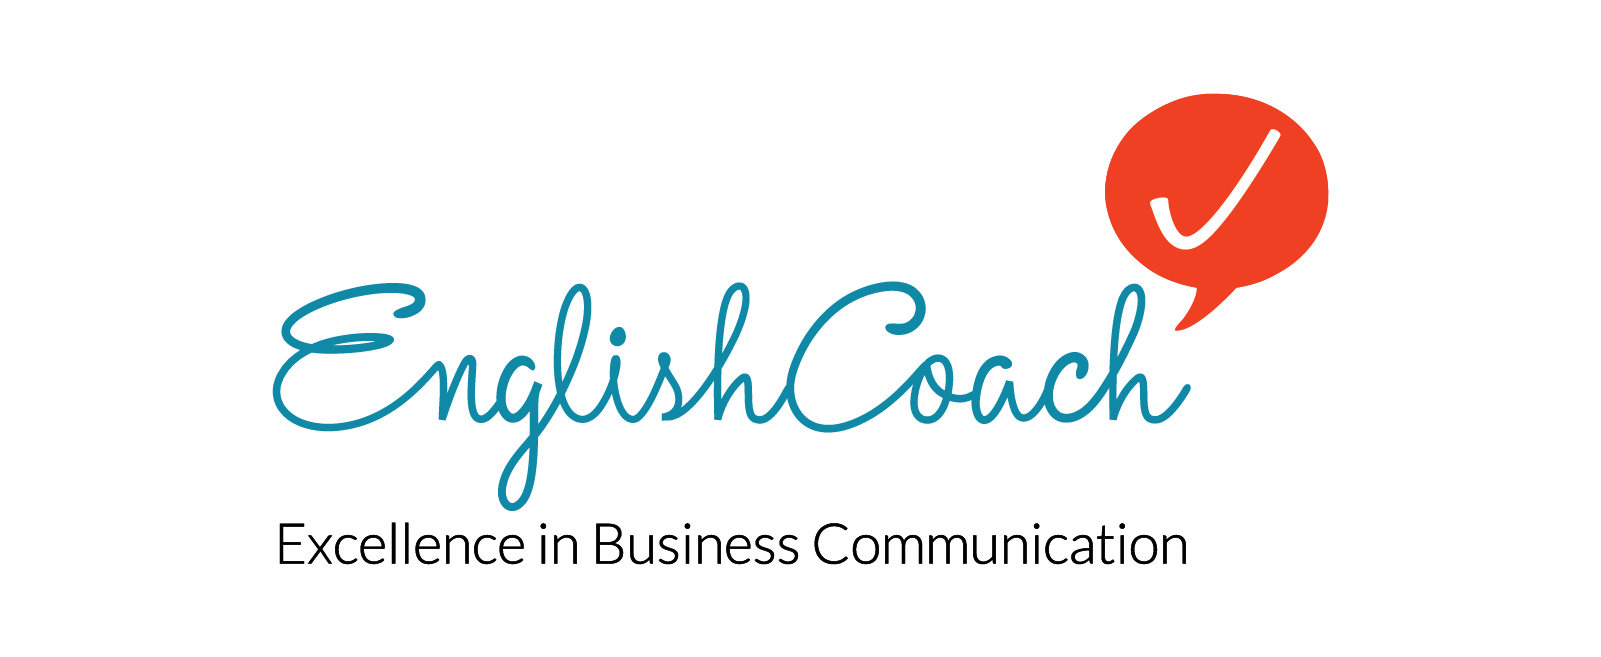 EnglishCoach Services